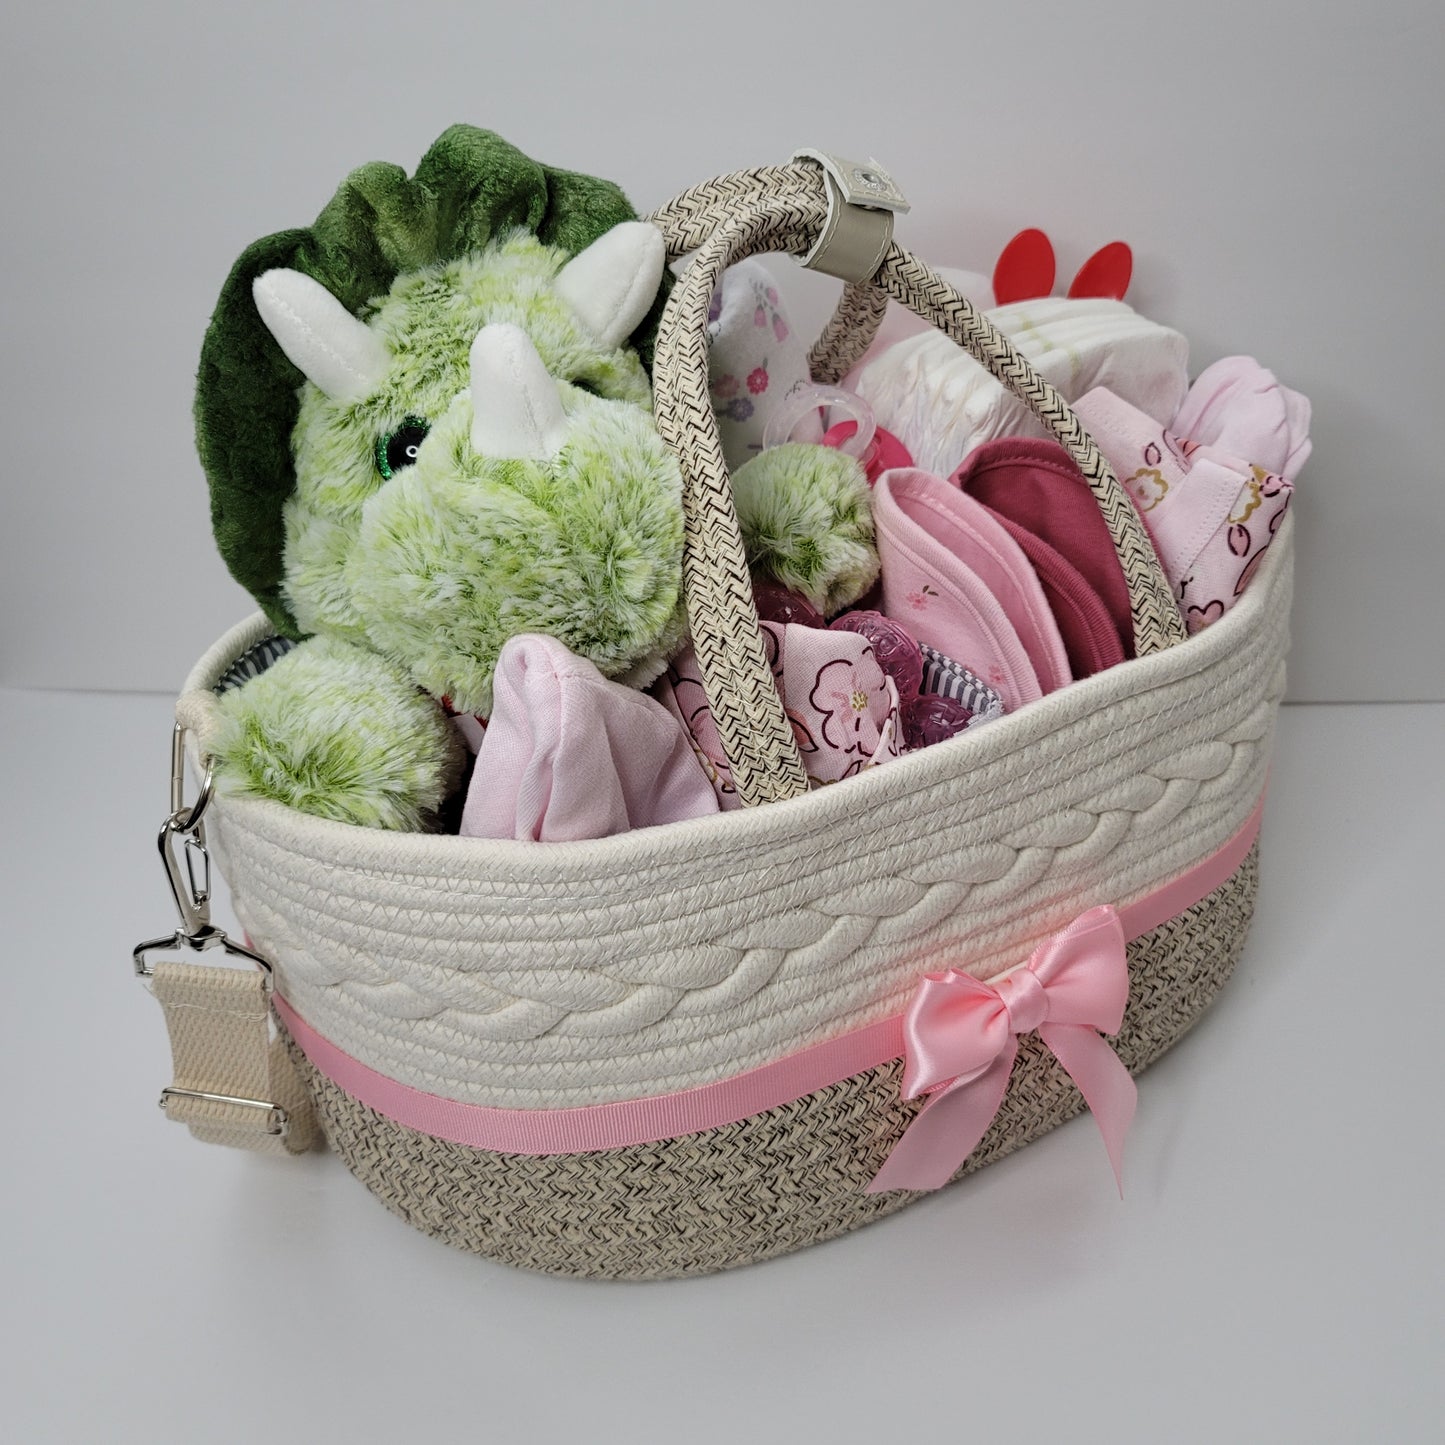 Sweet Baby Diaper Caddy Organizer Gift Basket